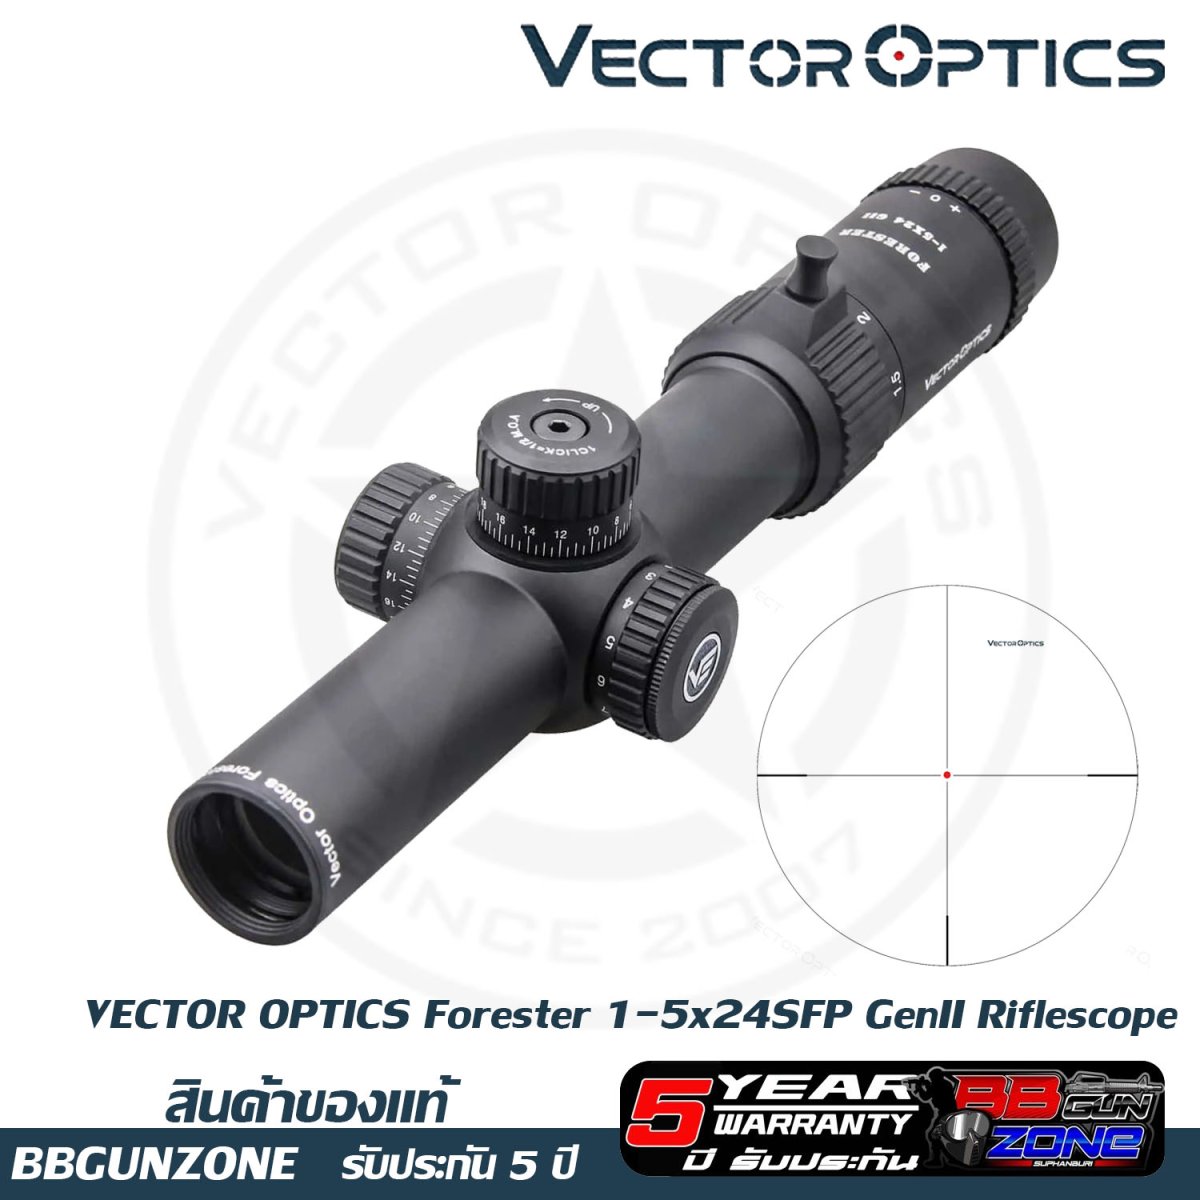 Vector optics Forester 1-5x24SFP GenII Riflescope - bbgunzone